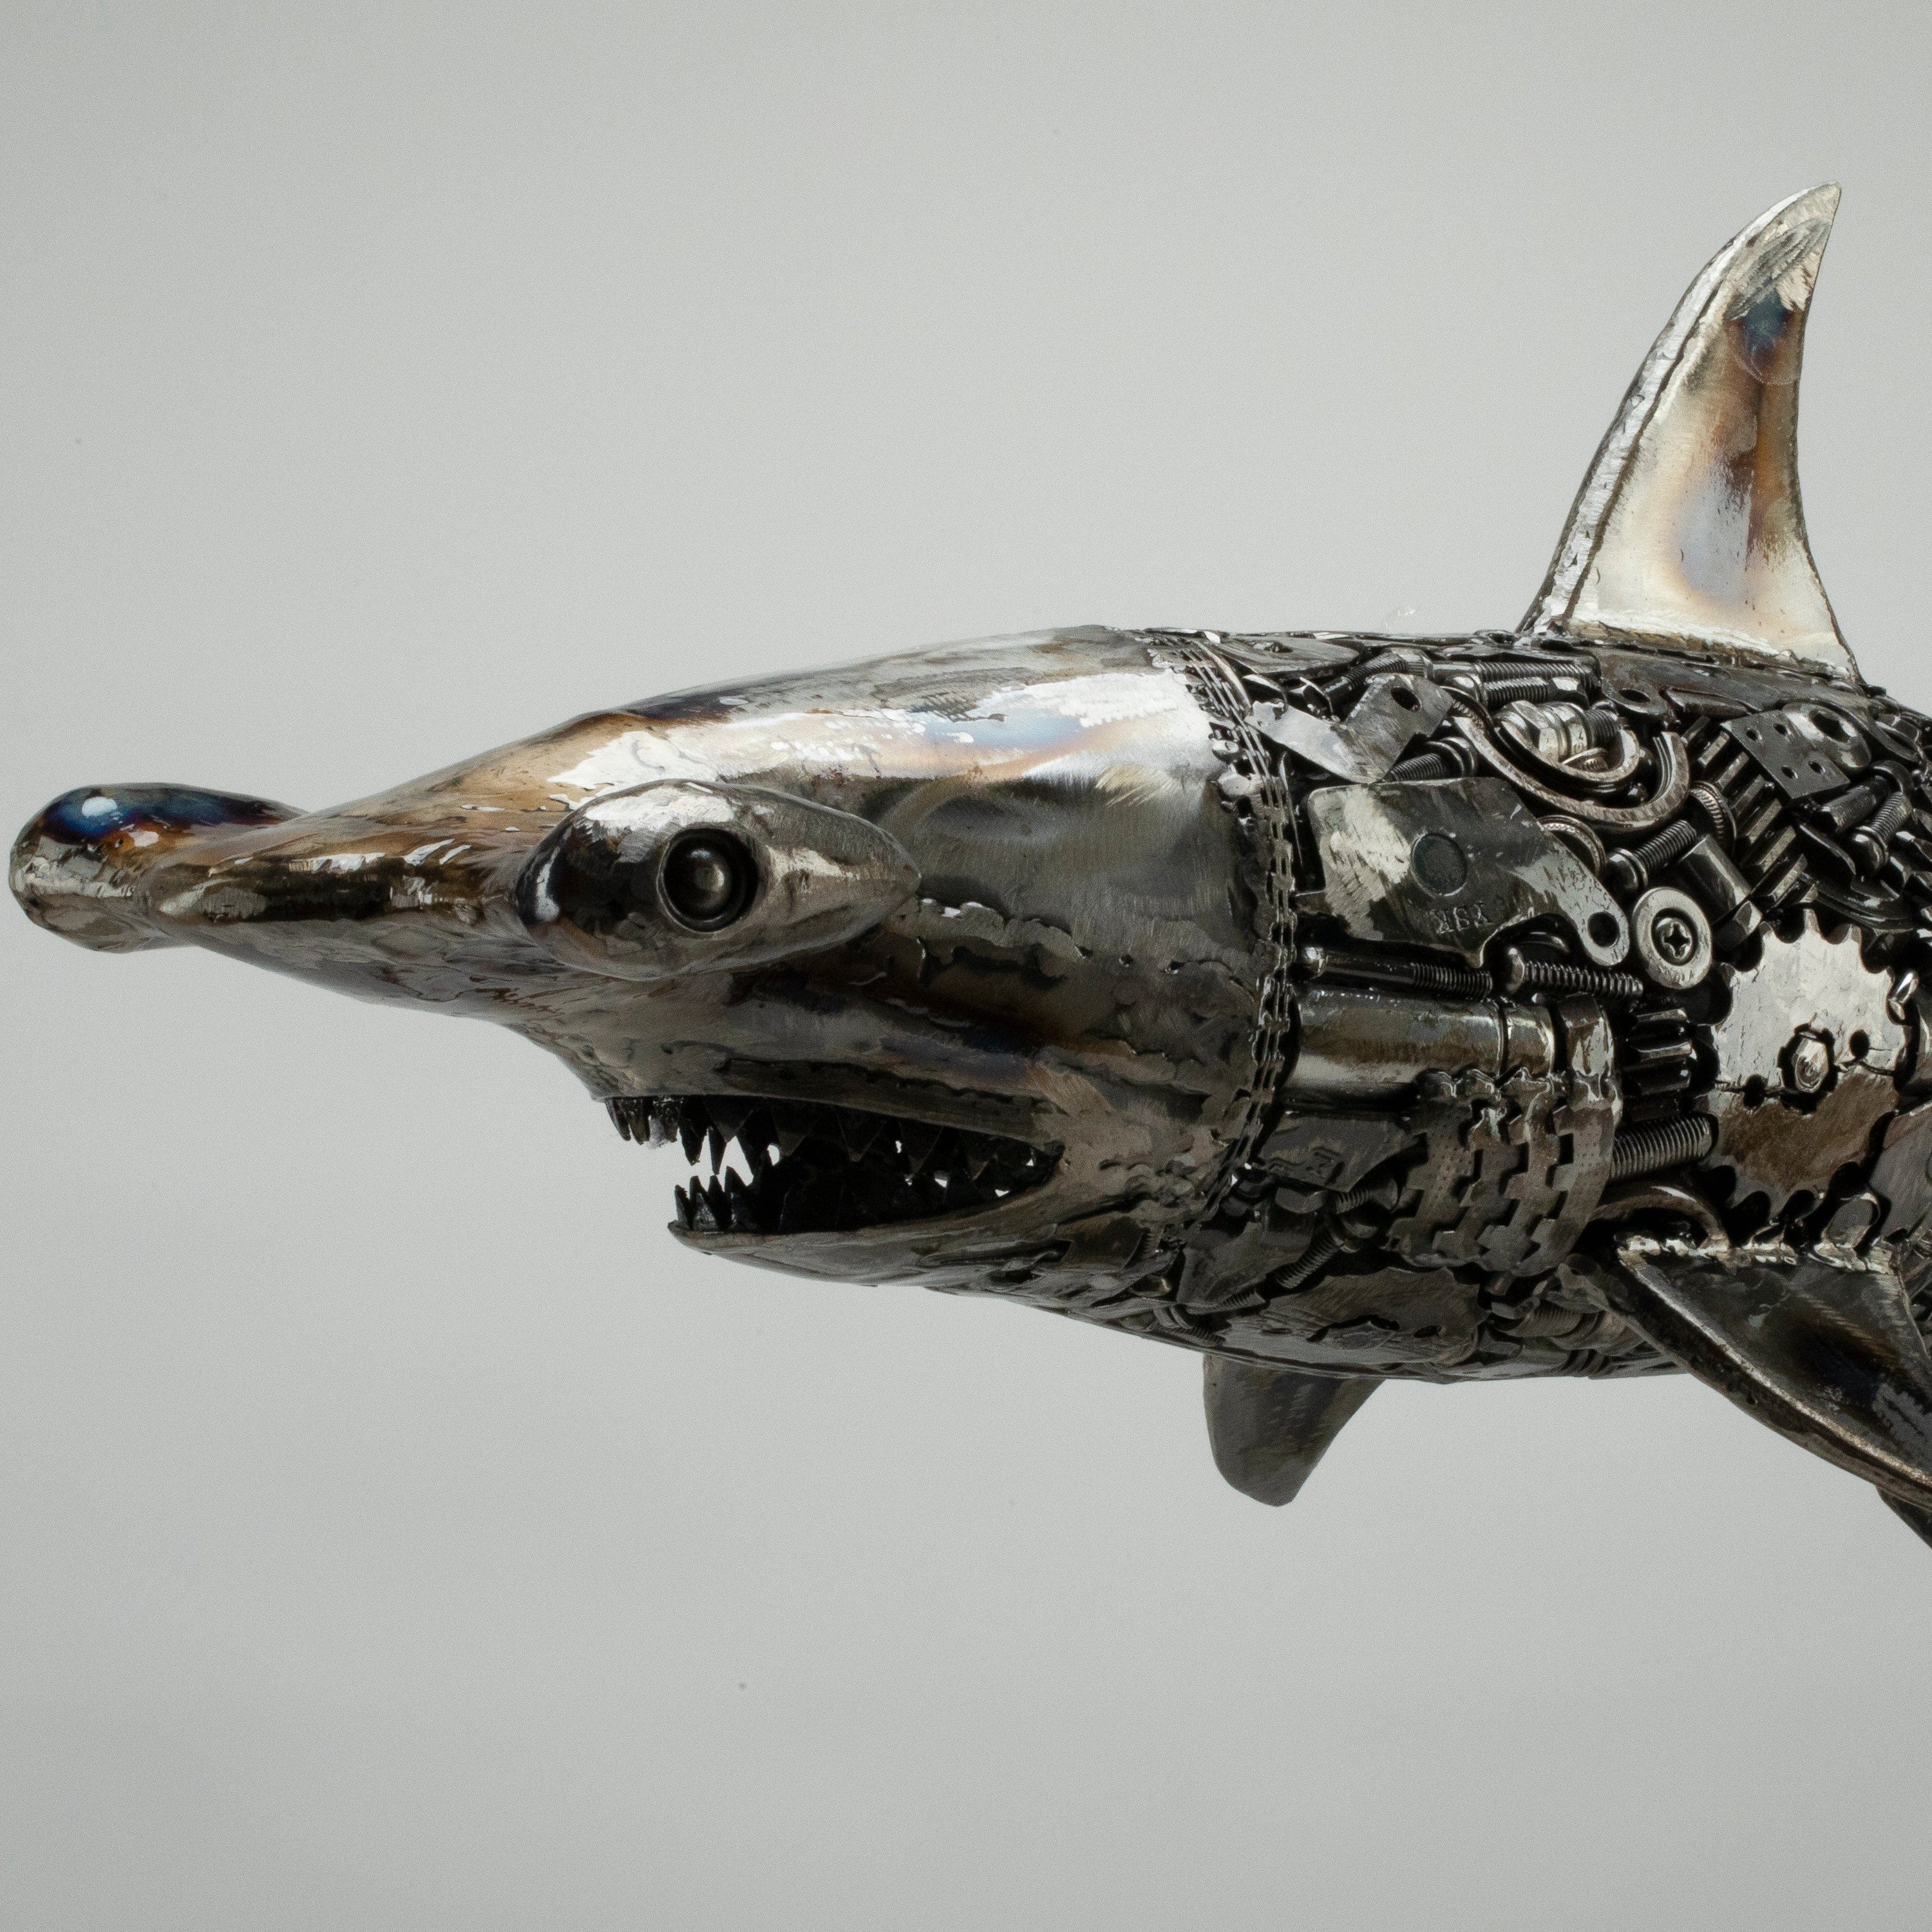 KALIFANO Recycled Metal Art 38" Hammerhead Shark Recycled Metal Art Sculpture RMS-HHS96x51-PK